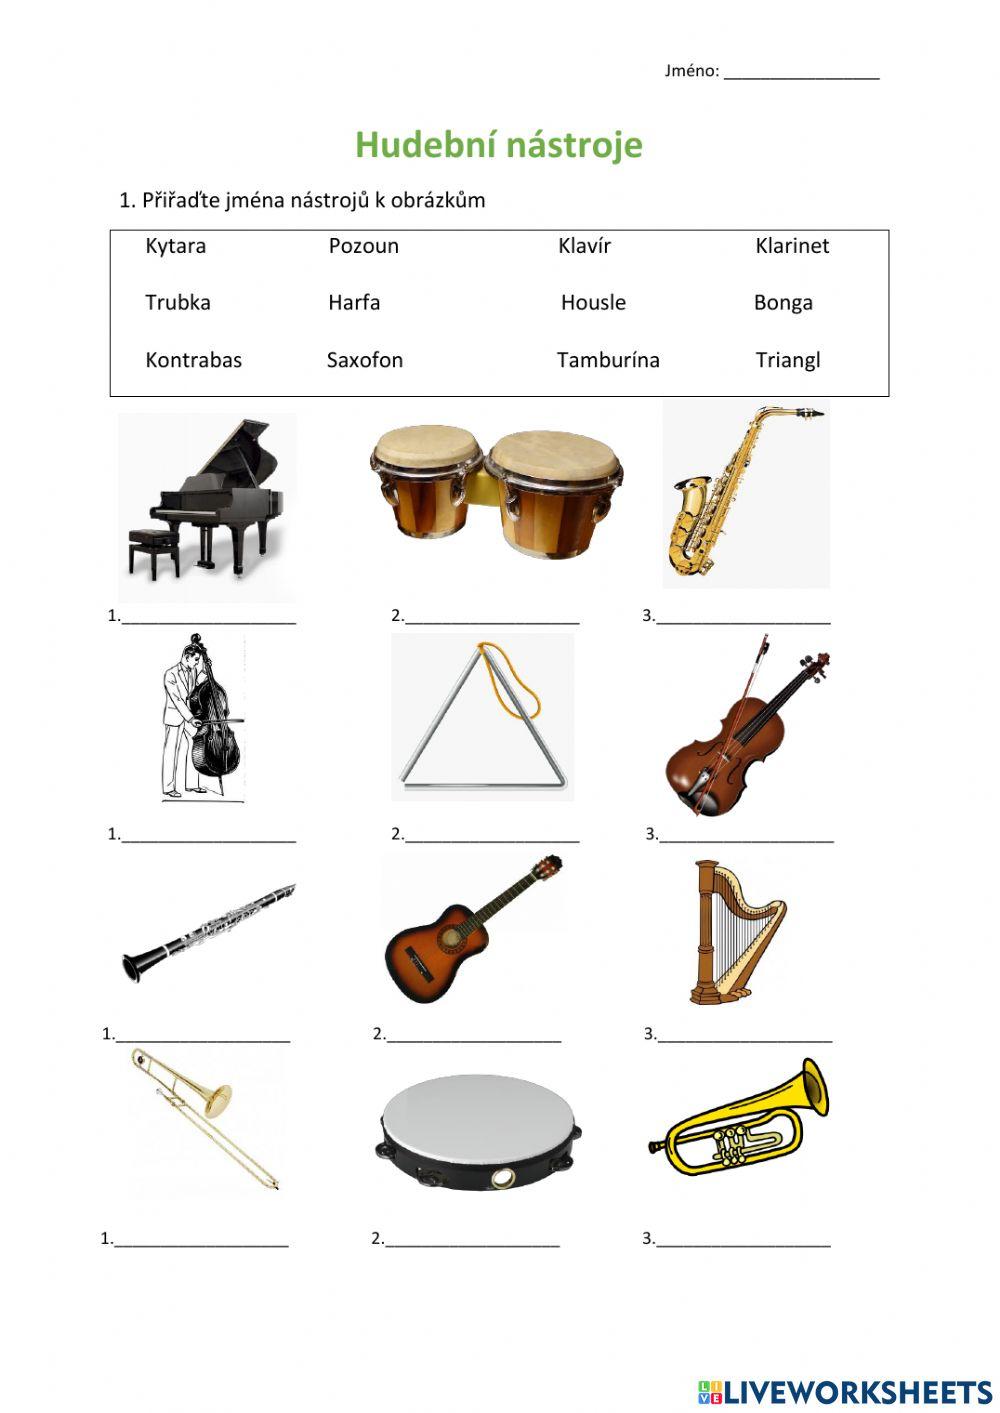 Hudební nástroje a teorie worksheet | Live Worksheets